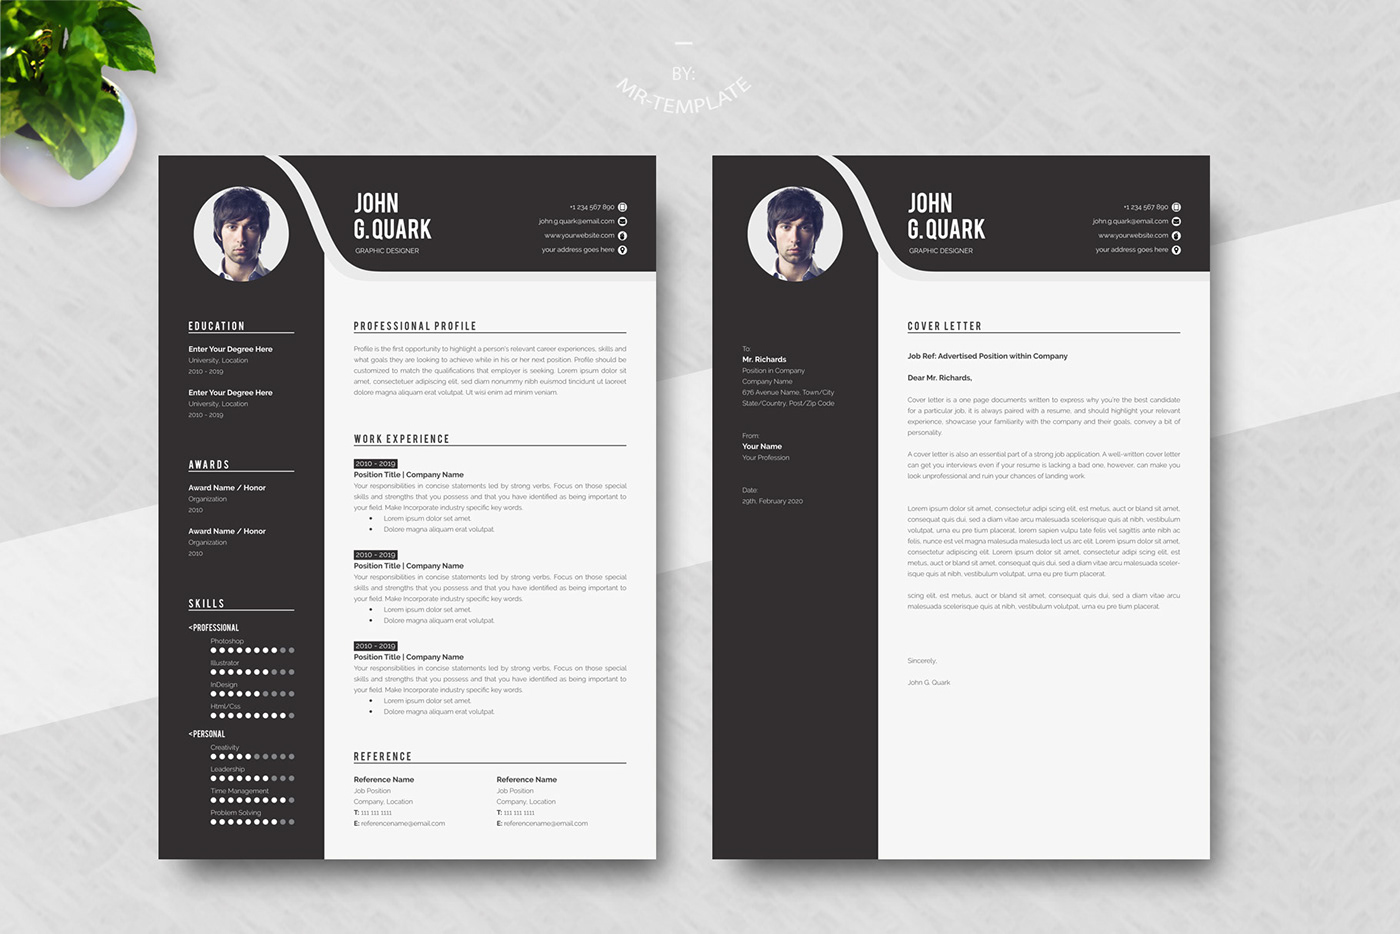 clean resume CV Download CV Free Resume Icon Minimal Resume one page resume PROFESSIONAL RESUME Resume resume design